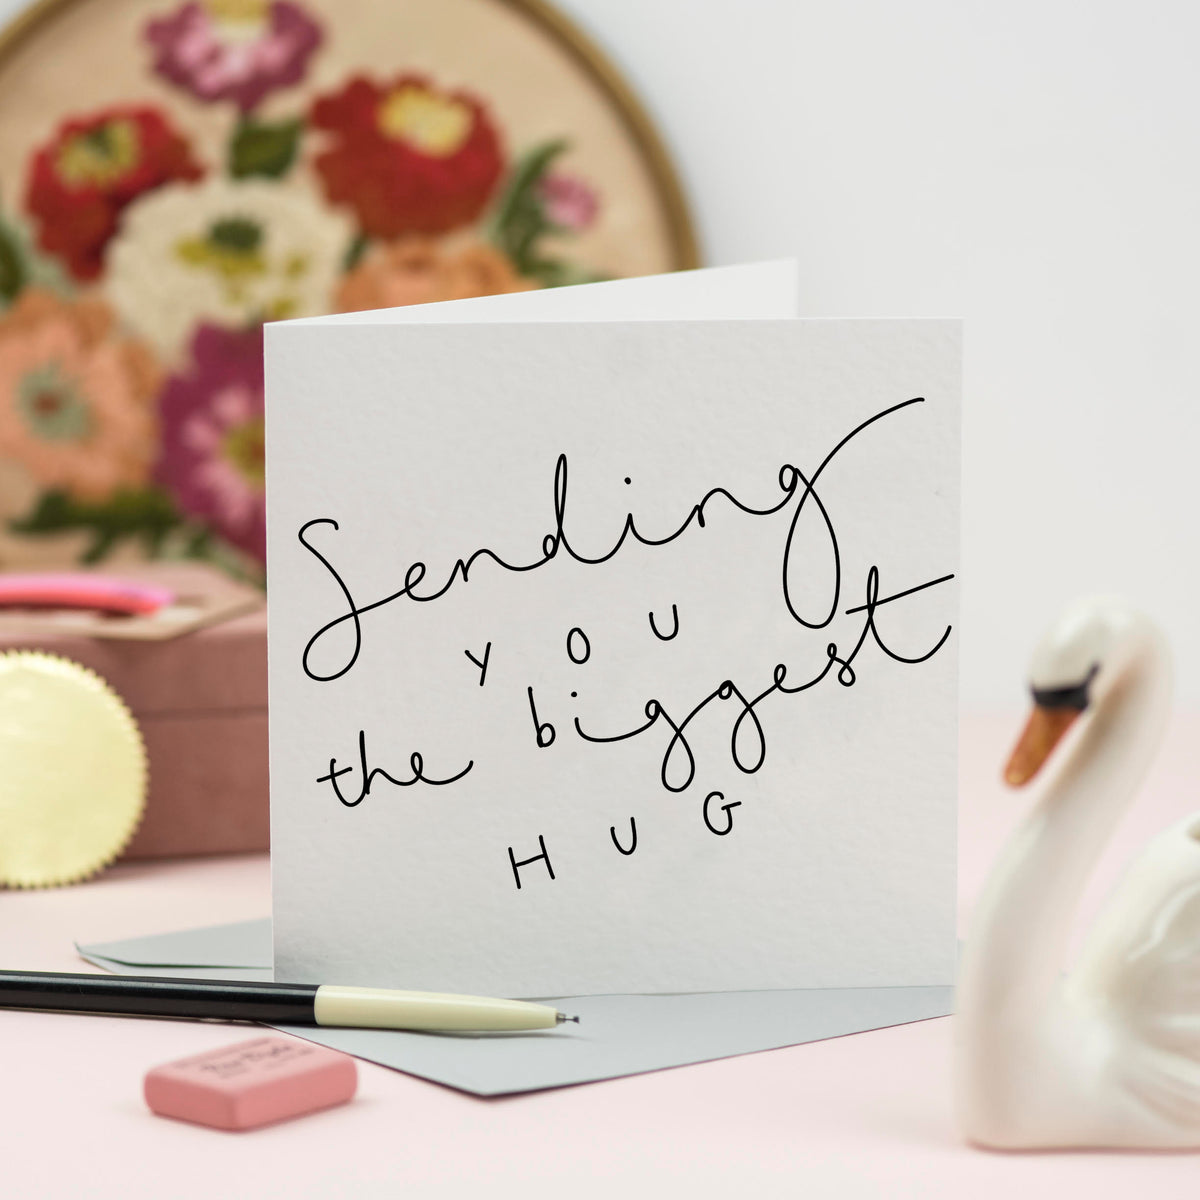 'Sending you the Biggest Hug' Hand Lettered Card